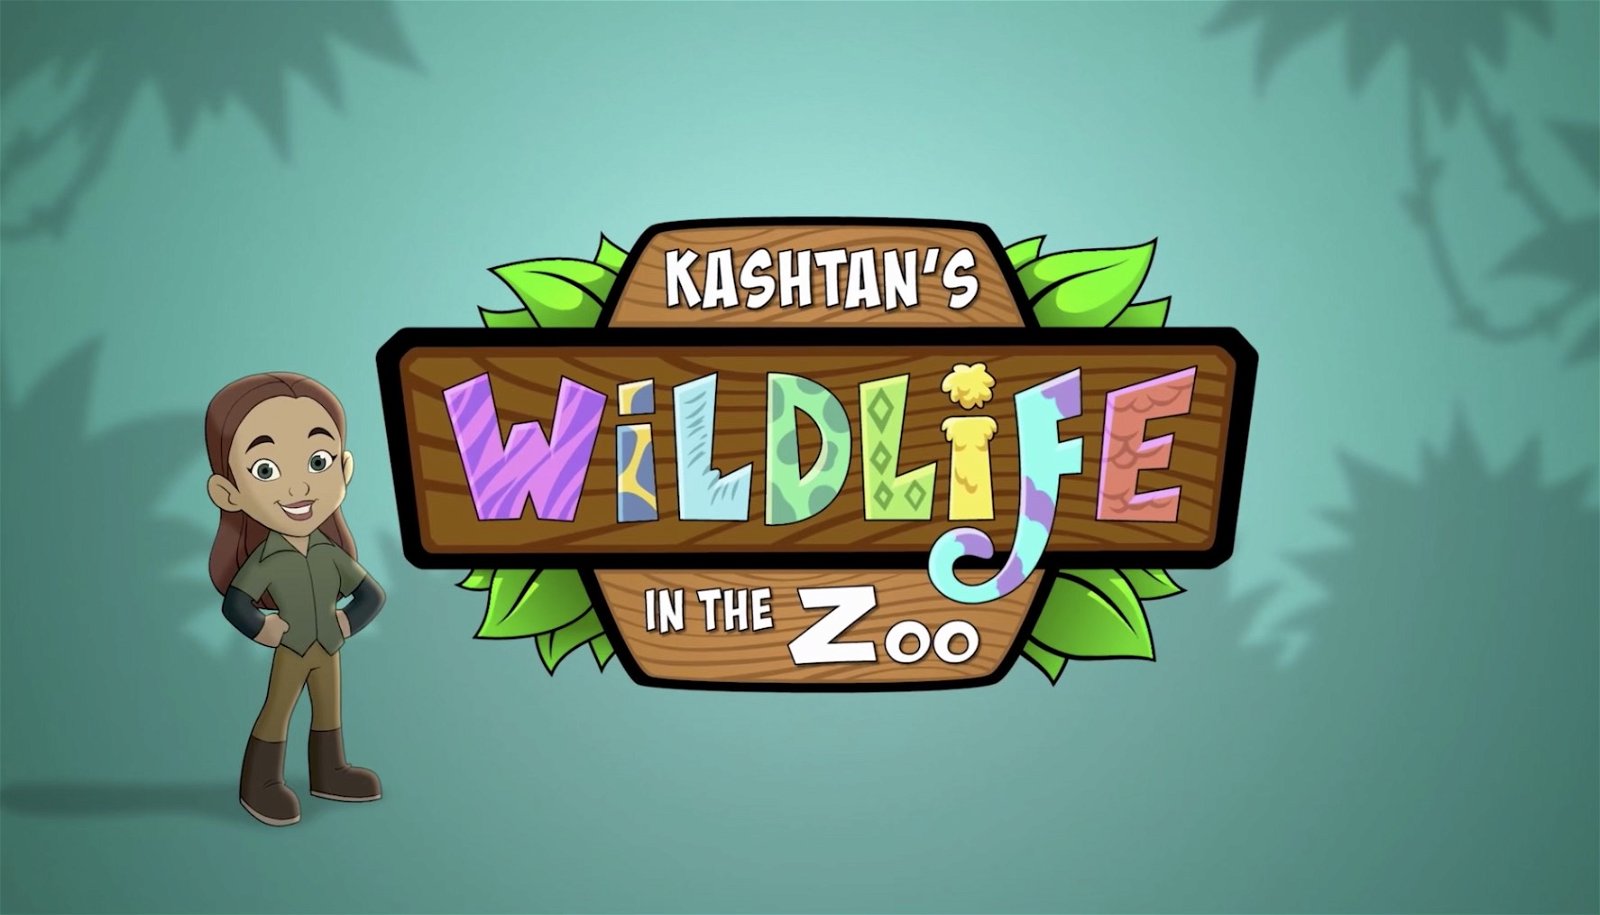 Kashtan's Wildlife in the Zoo